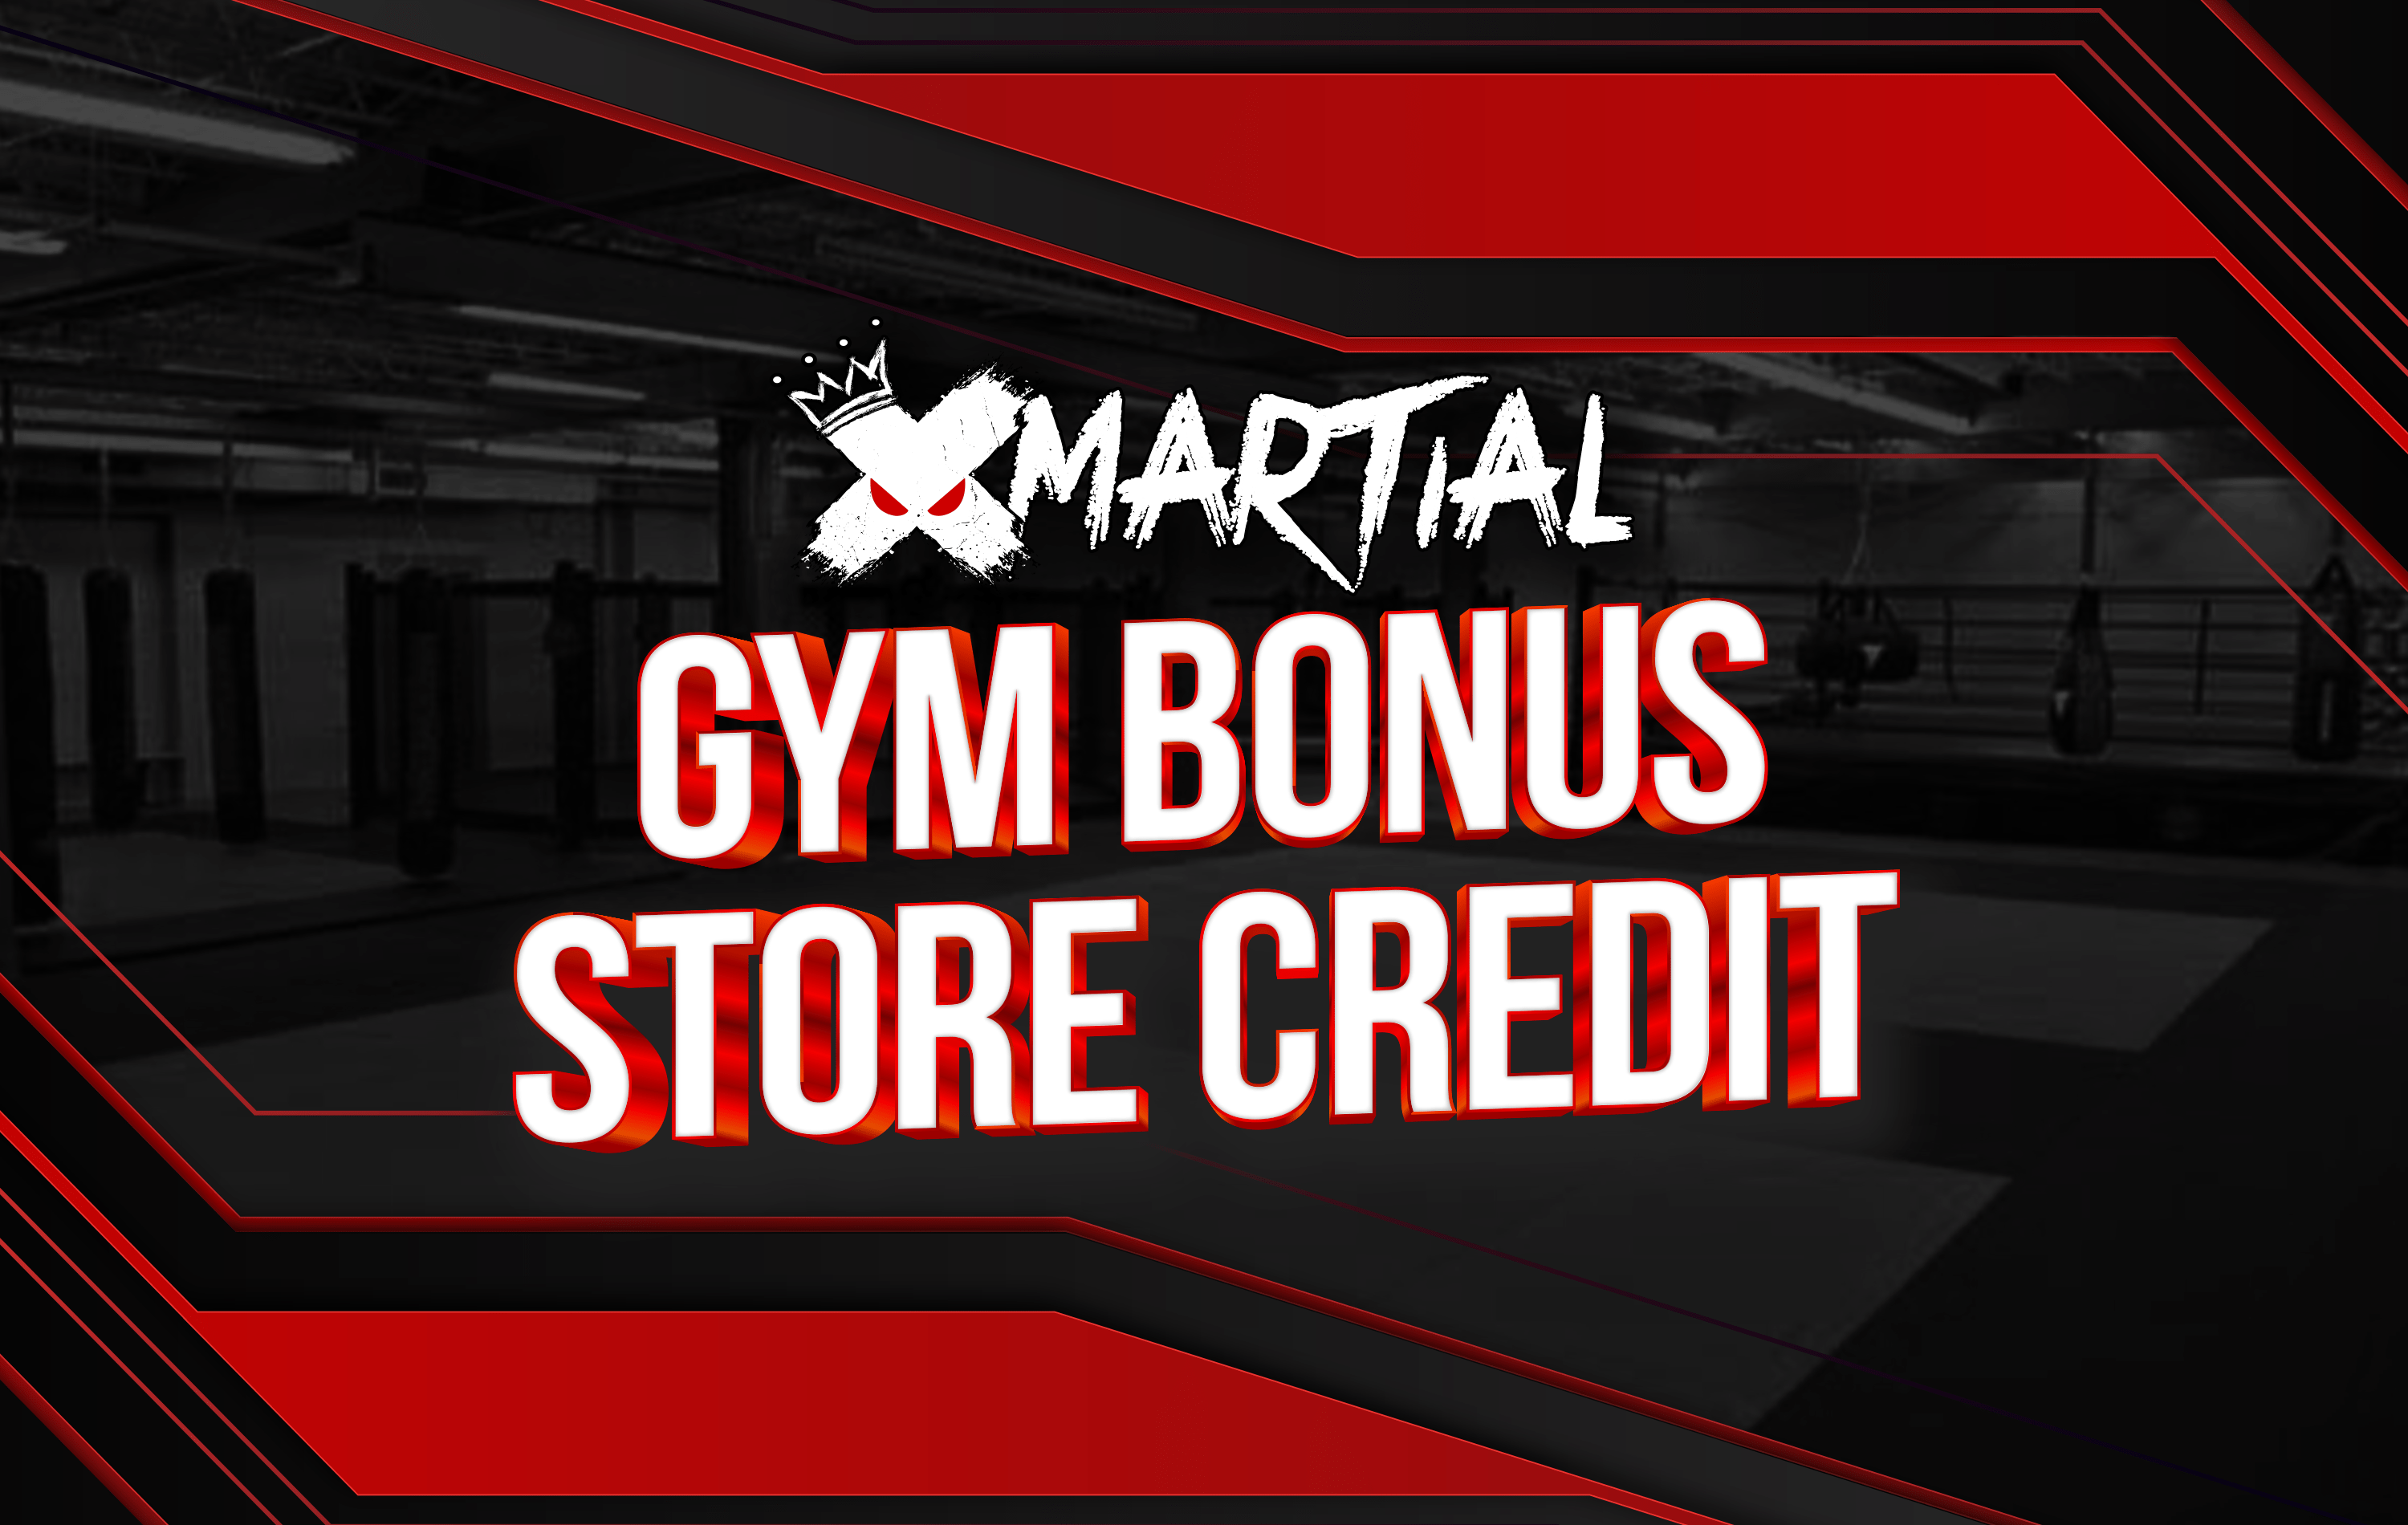 Gym Bonus Store Credit XMARTIAL